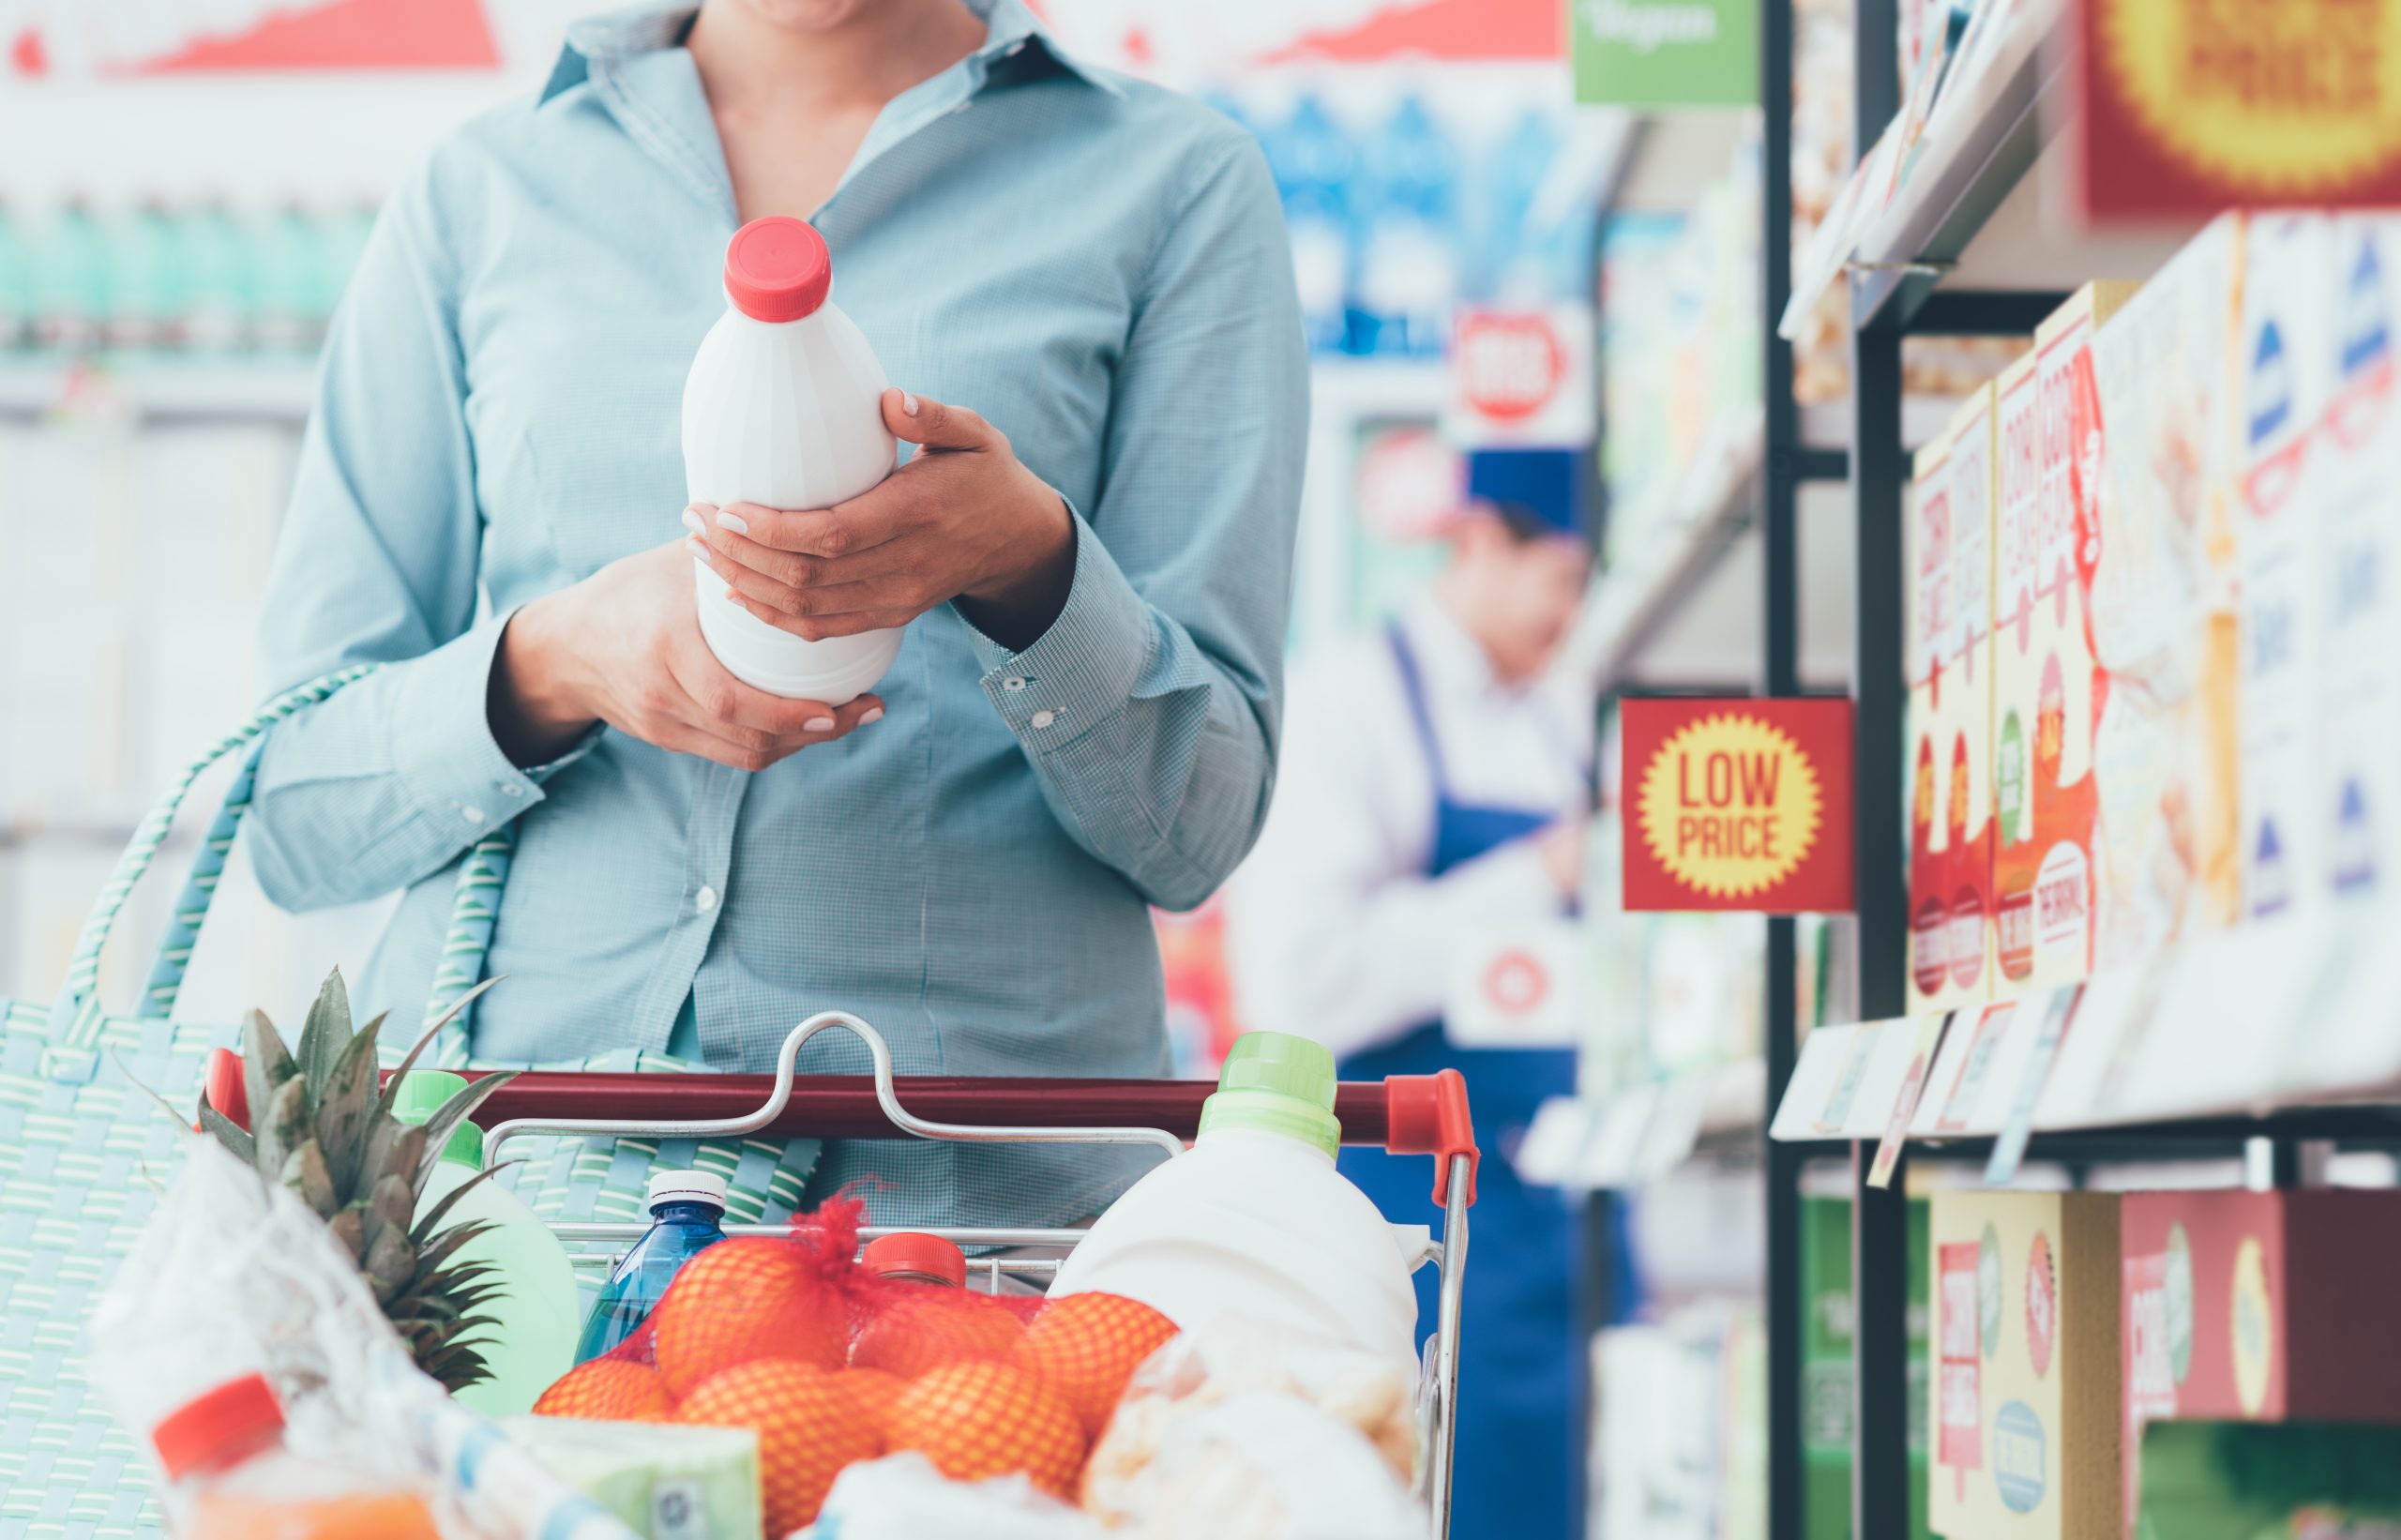 New eco-label to get supermarket trials